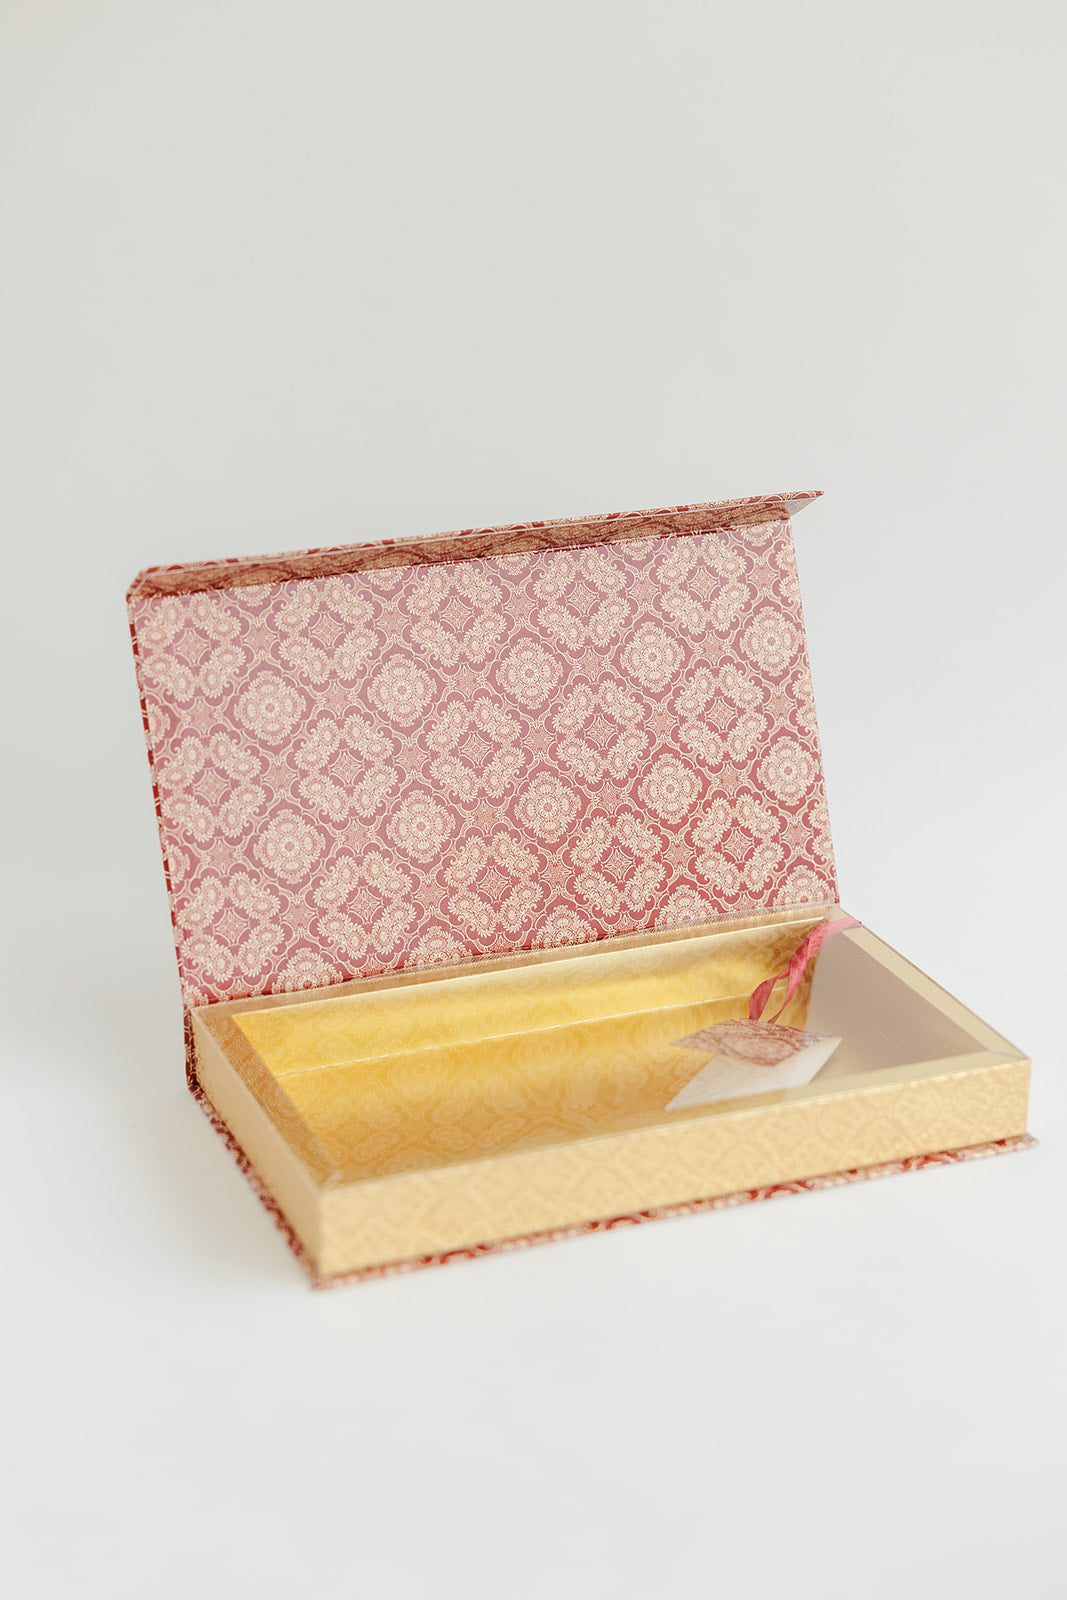 Luxury Printed Brown Gift Box